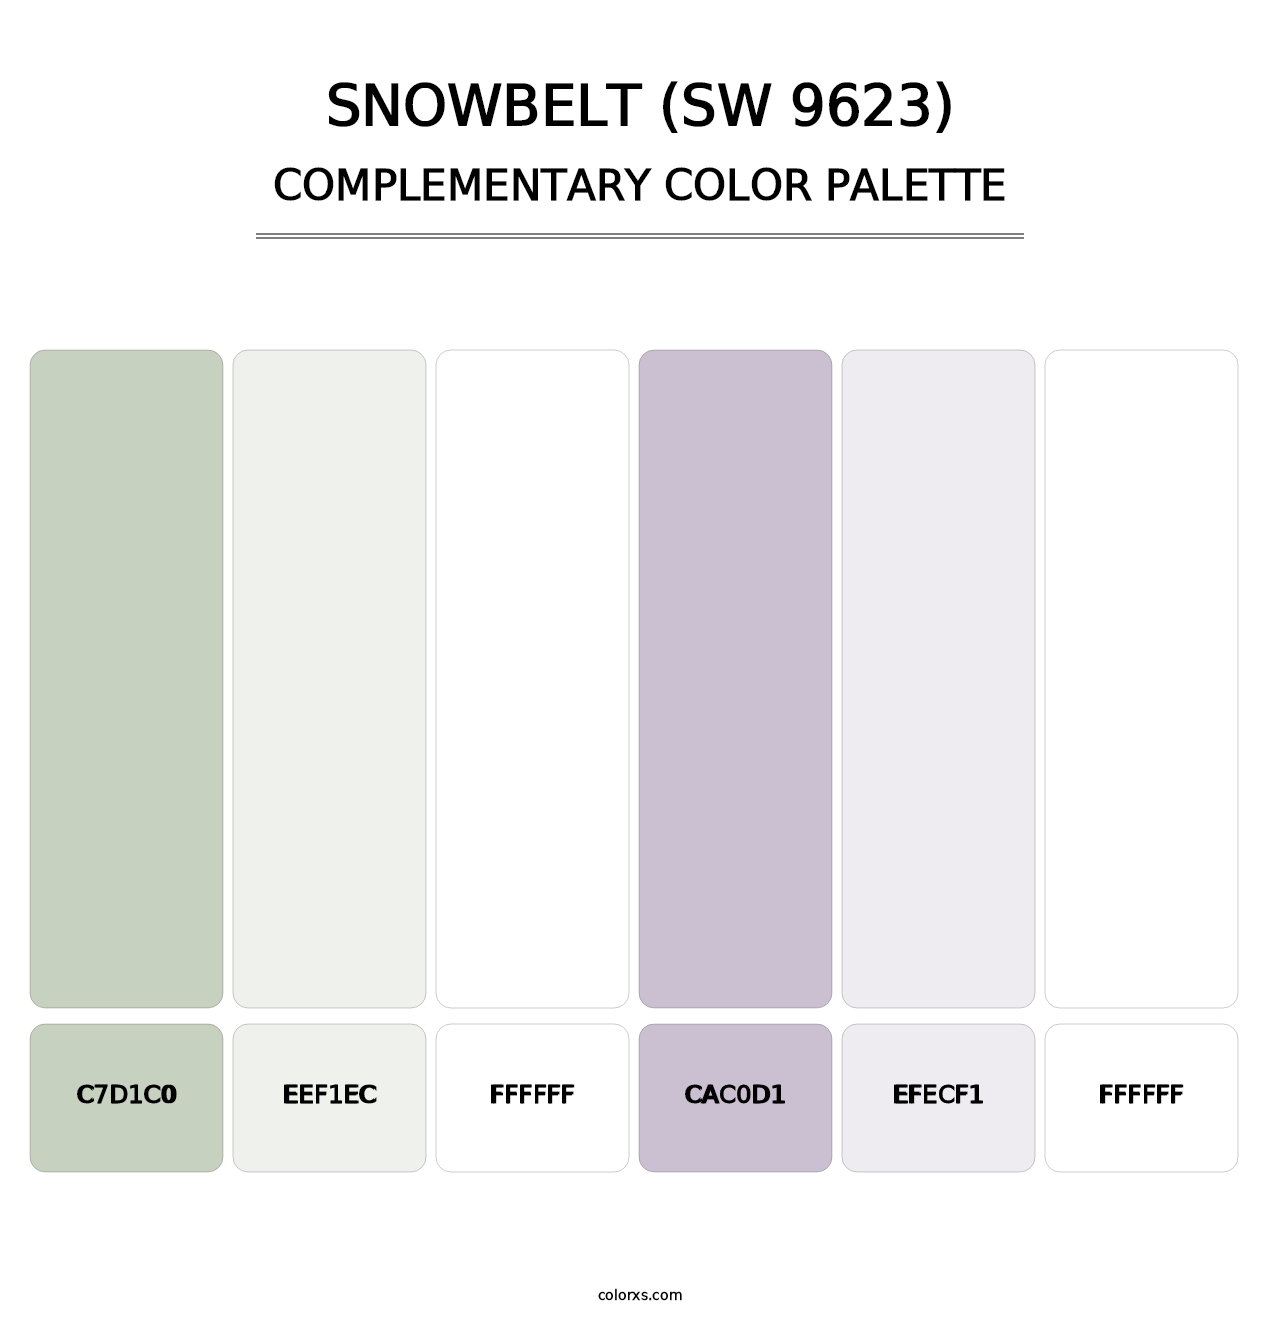 Snowbelt (SW 9623) - Complementary Color Palette